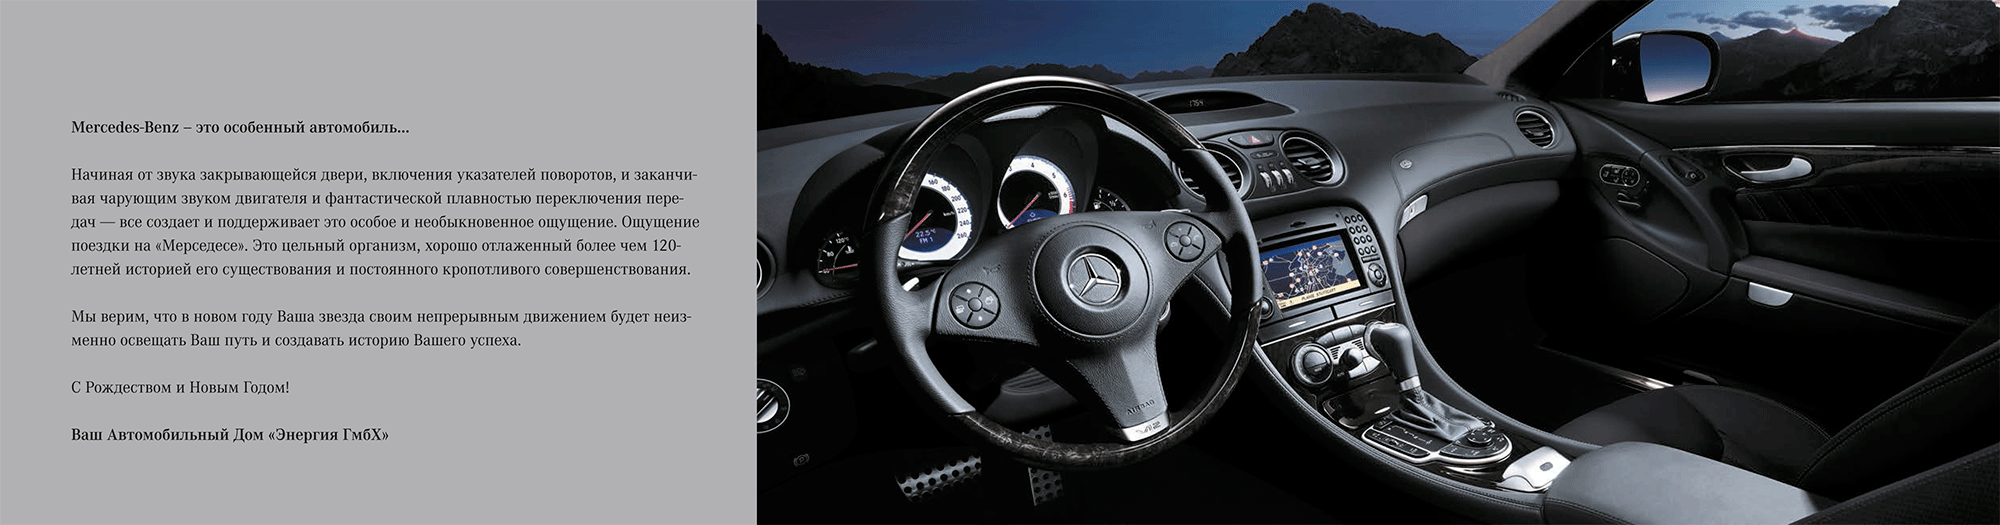 Mercedes-Benz Viano. Открытка Flycards